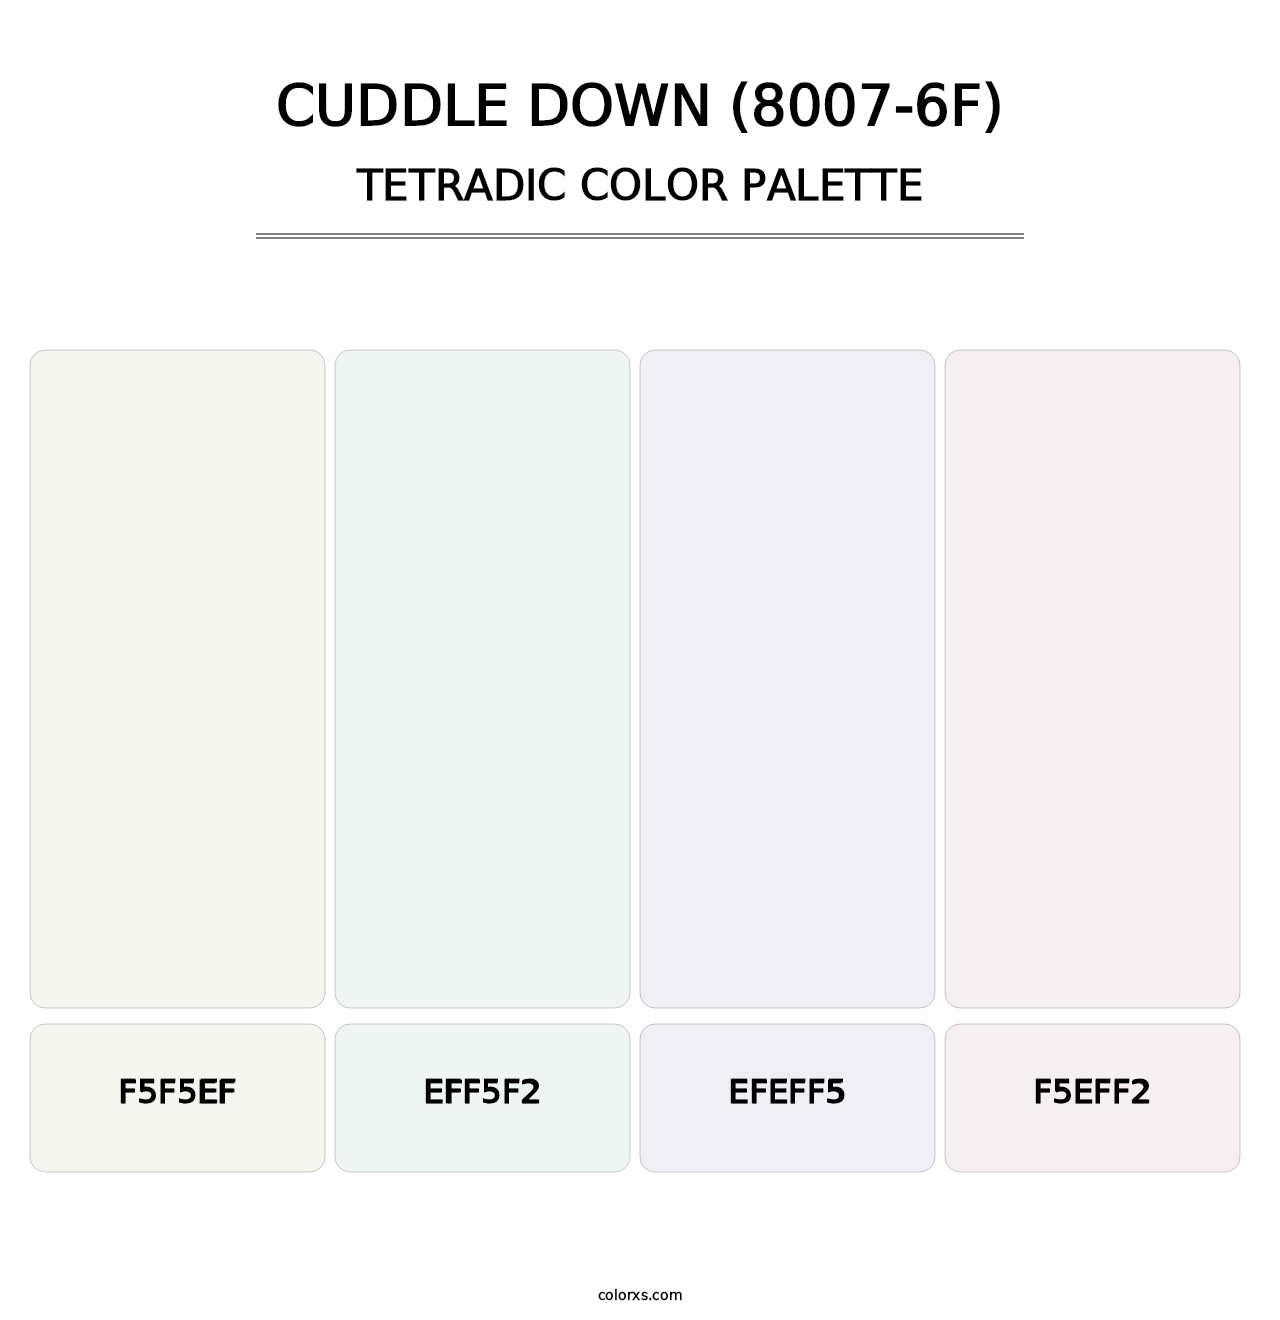 Cuddle Down (8007-6F) - Tetradic Color Palette